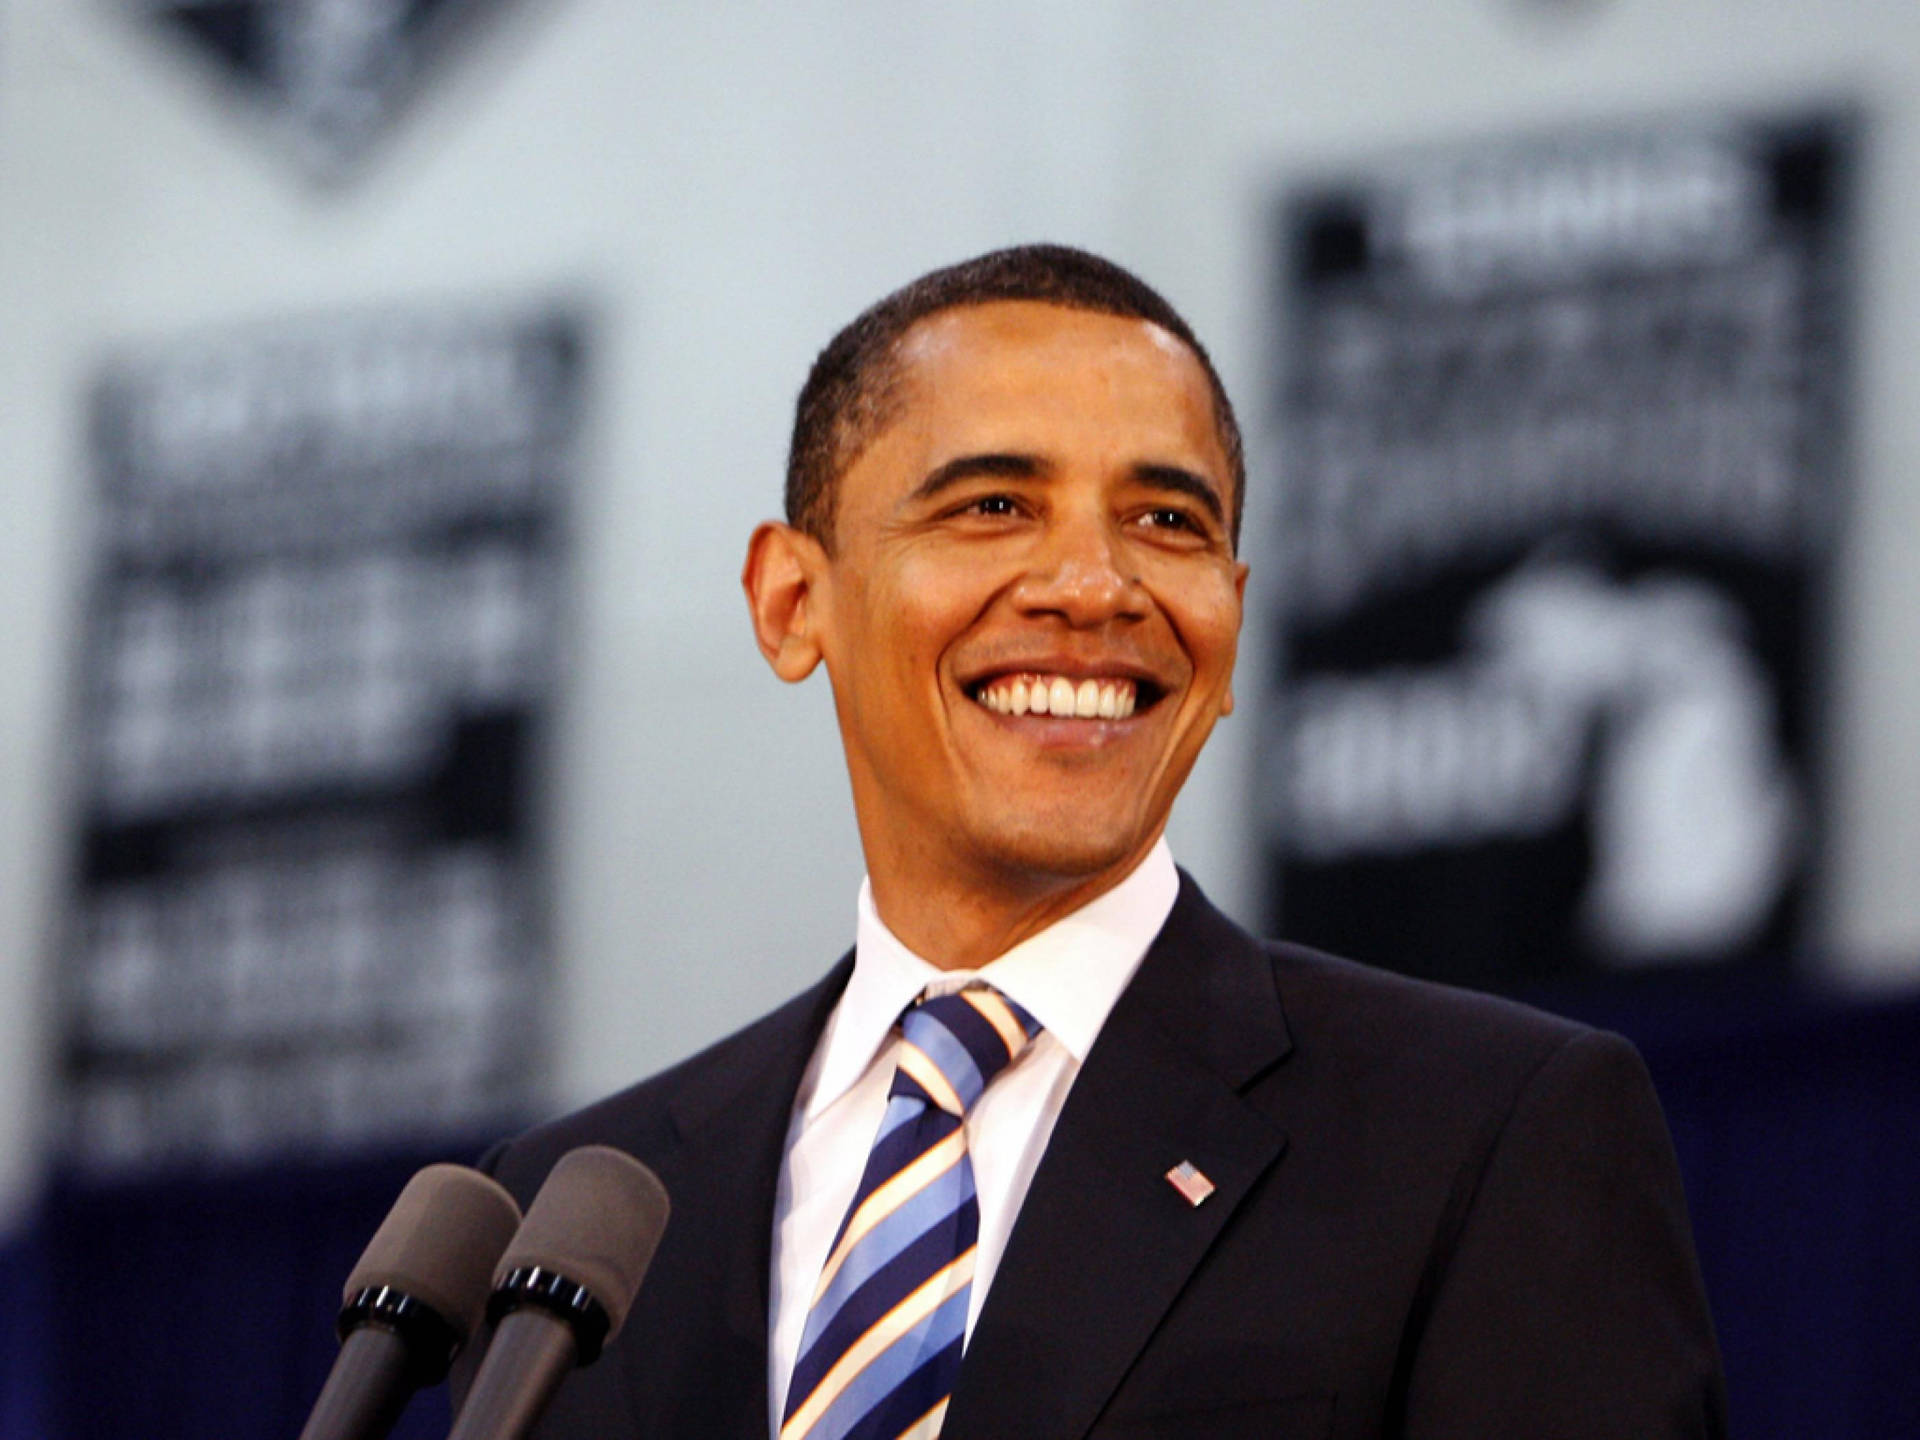 Barack Obama Smiling President